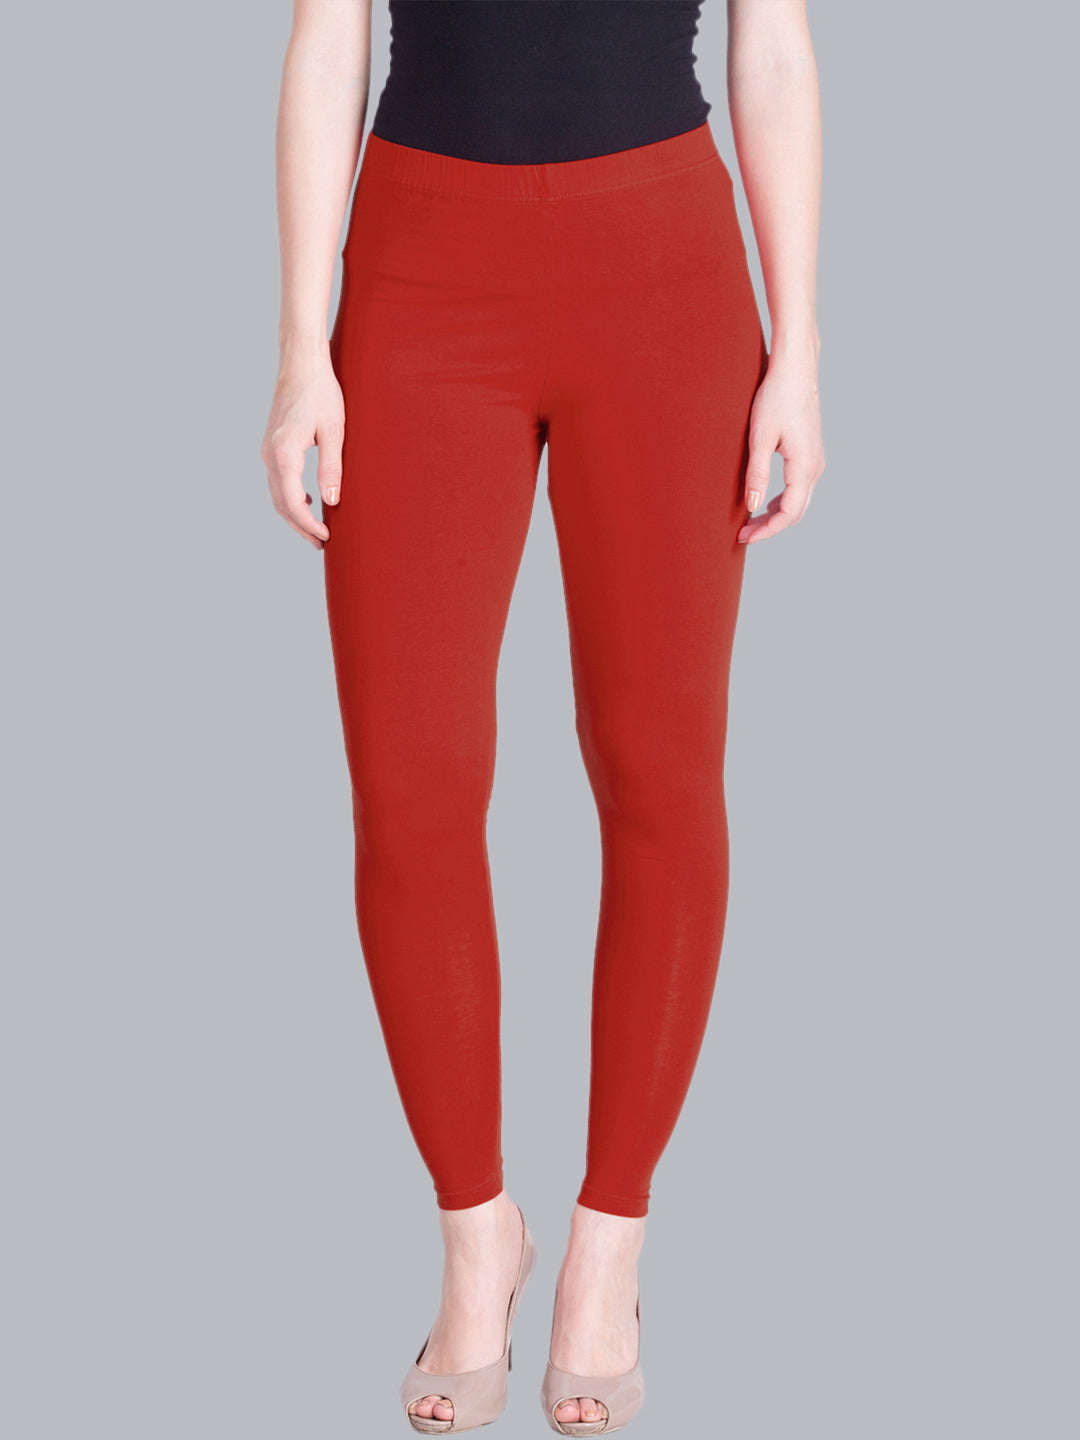 Red Color Cotton Full Length Legging